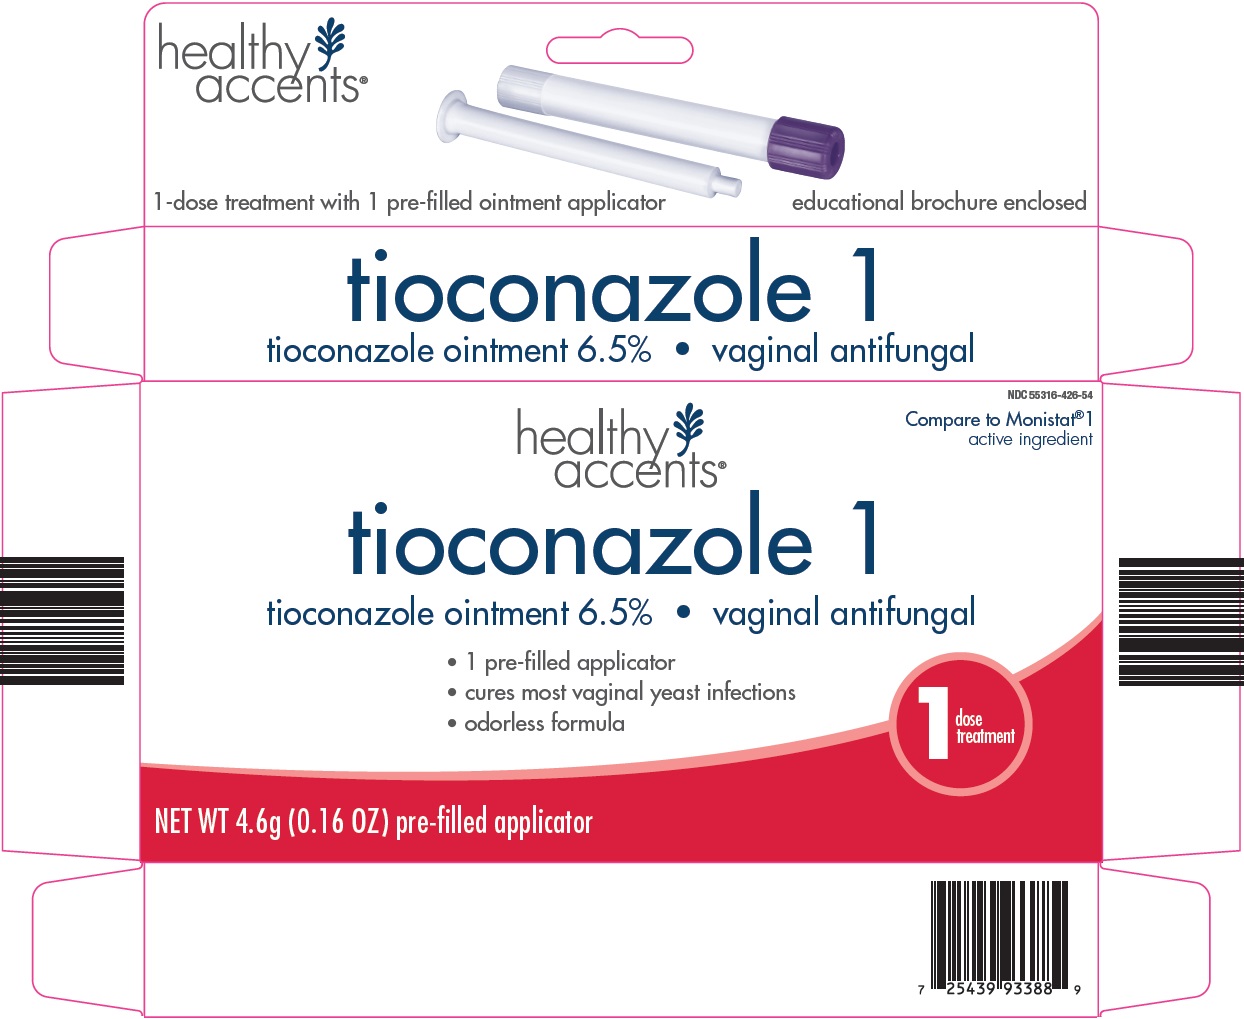 Healthy Accents Tioconazole 1 image 1